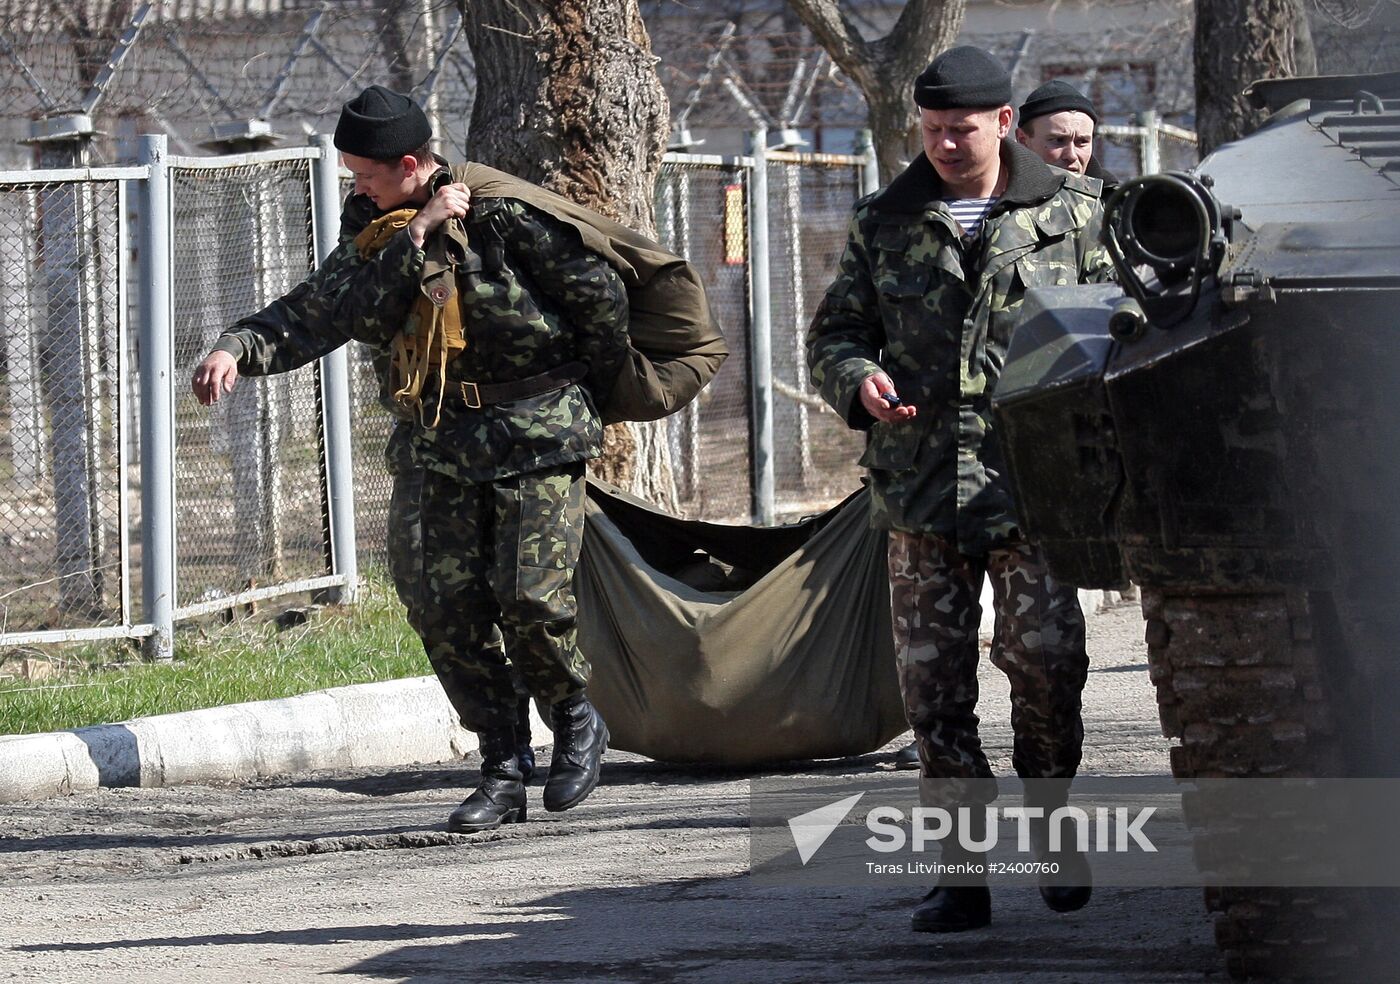 Ukrainian Navy Coastal Defense Brigade leaves military unit in Perevalnoe village